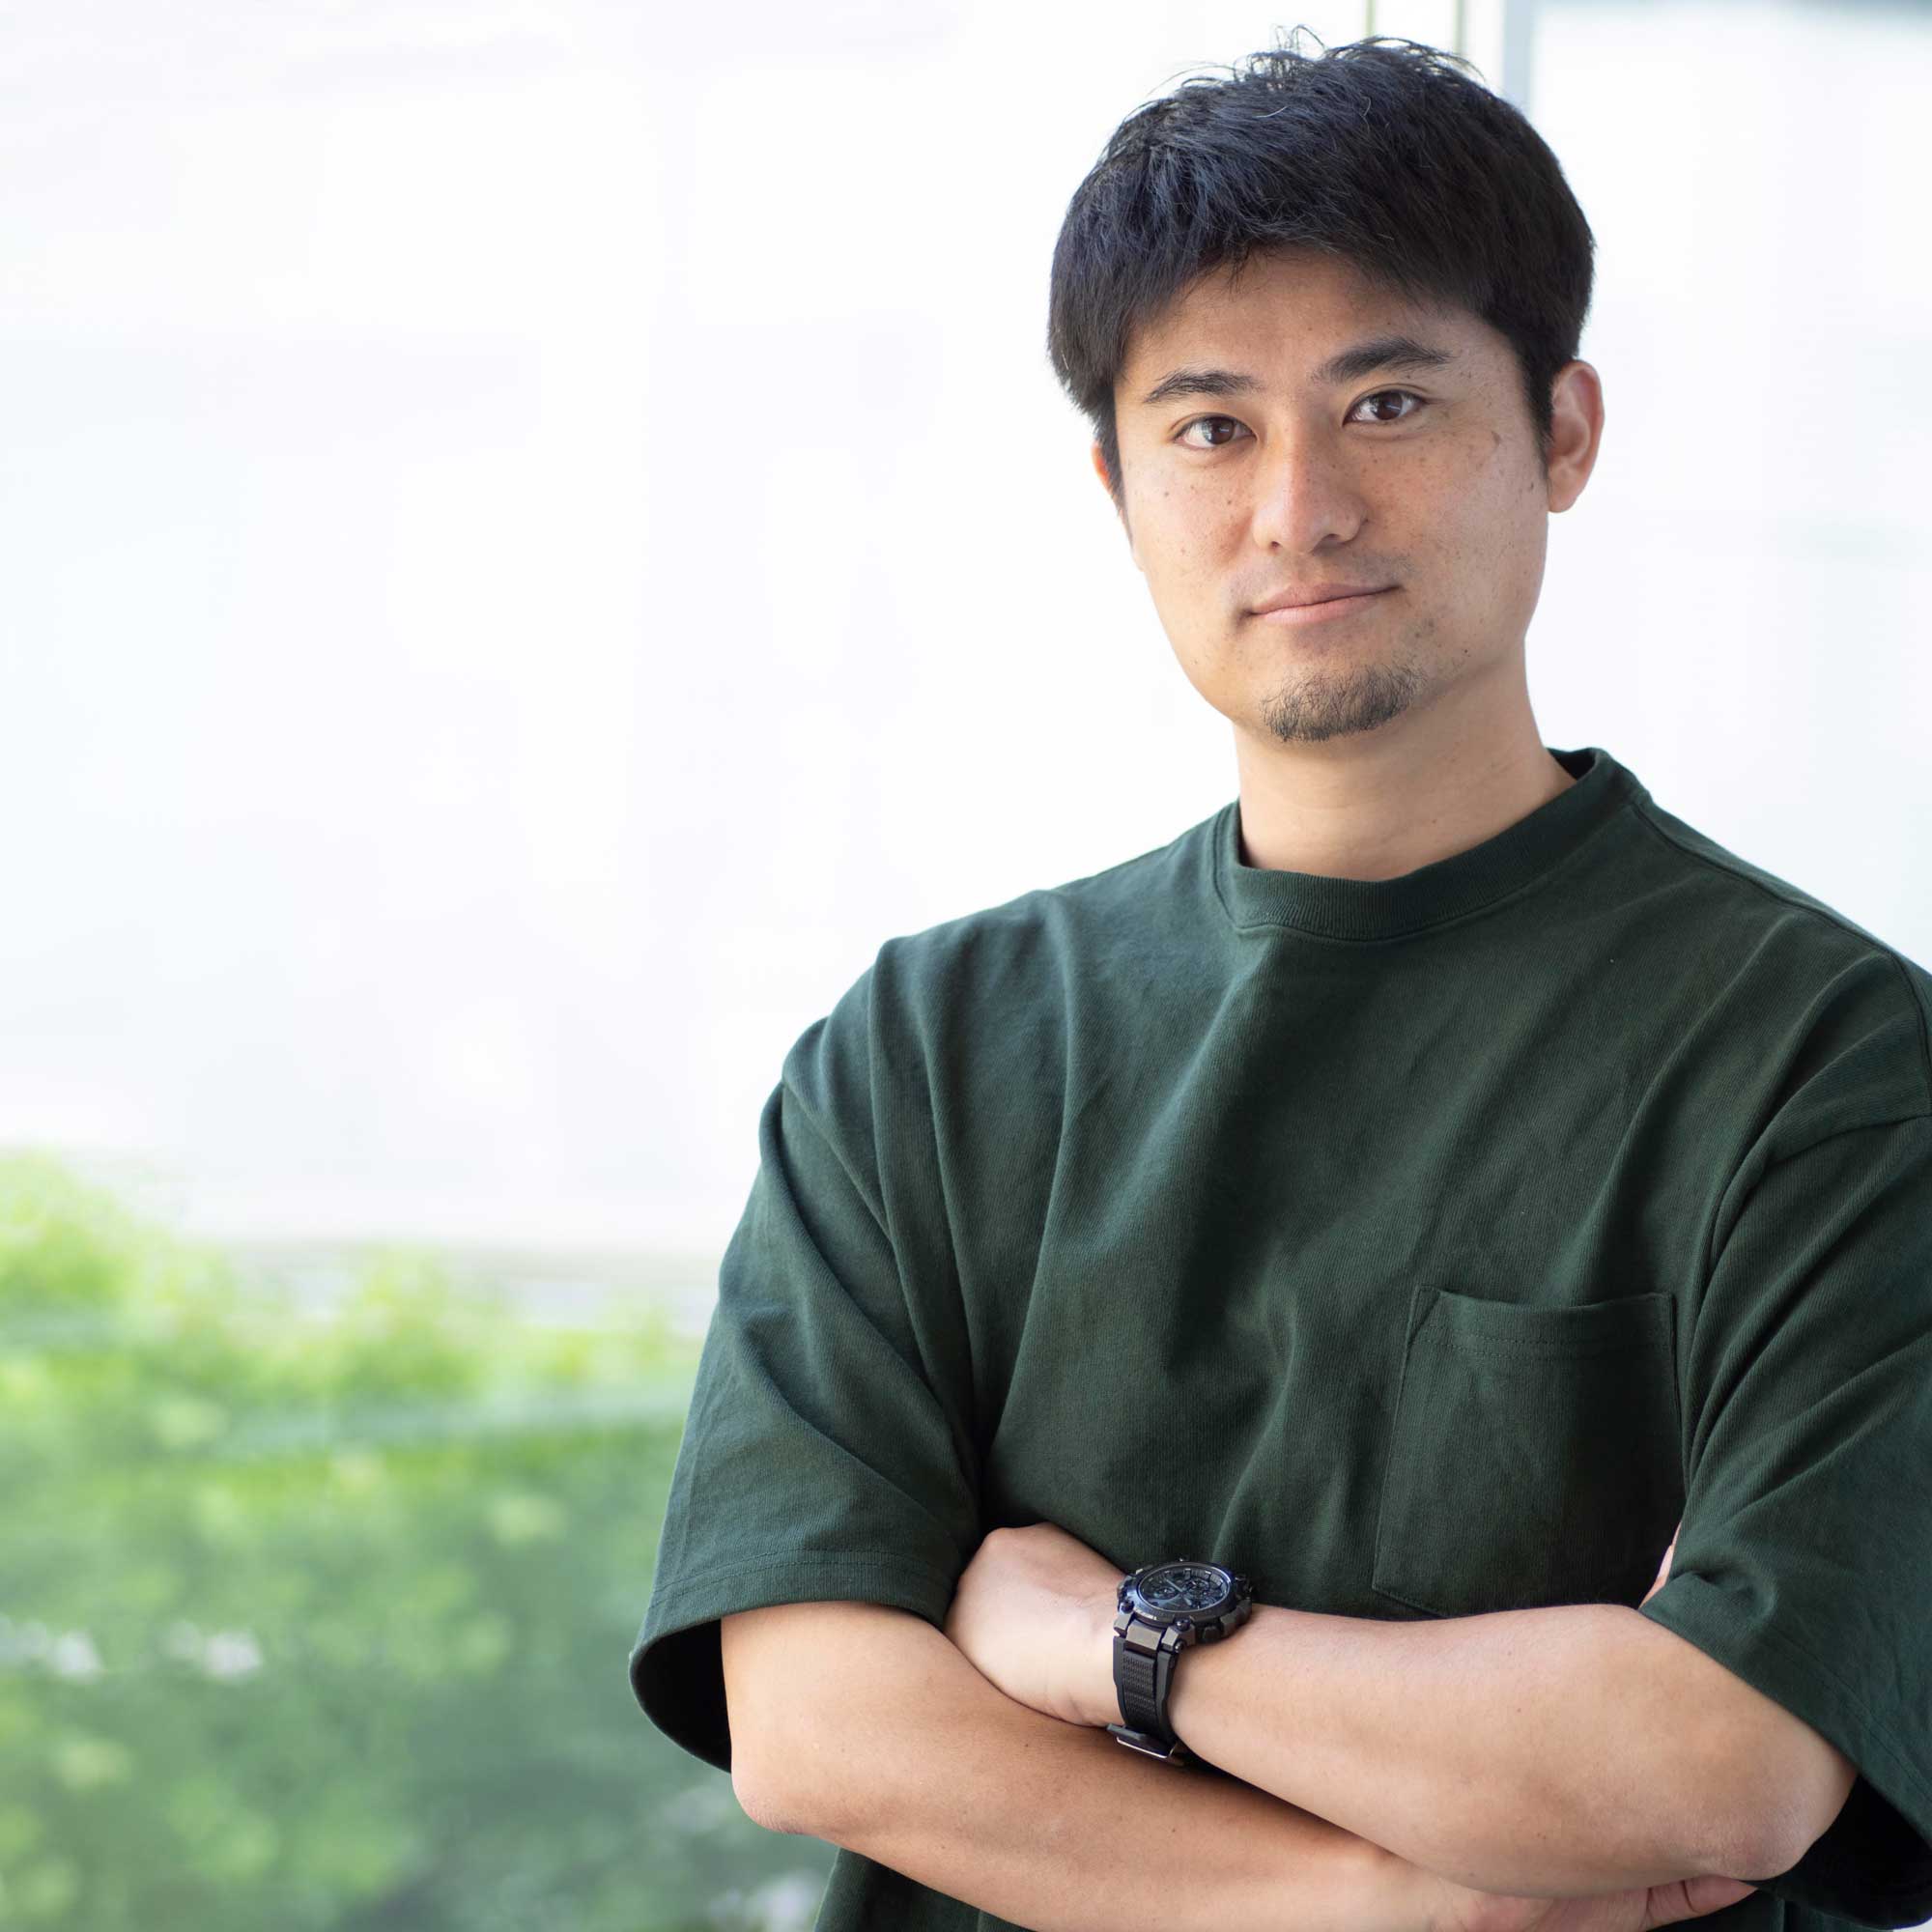 Mr Hamaue Tomohiro, Designer from the Design Department, Watches & Wearables (image: Casio)